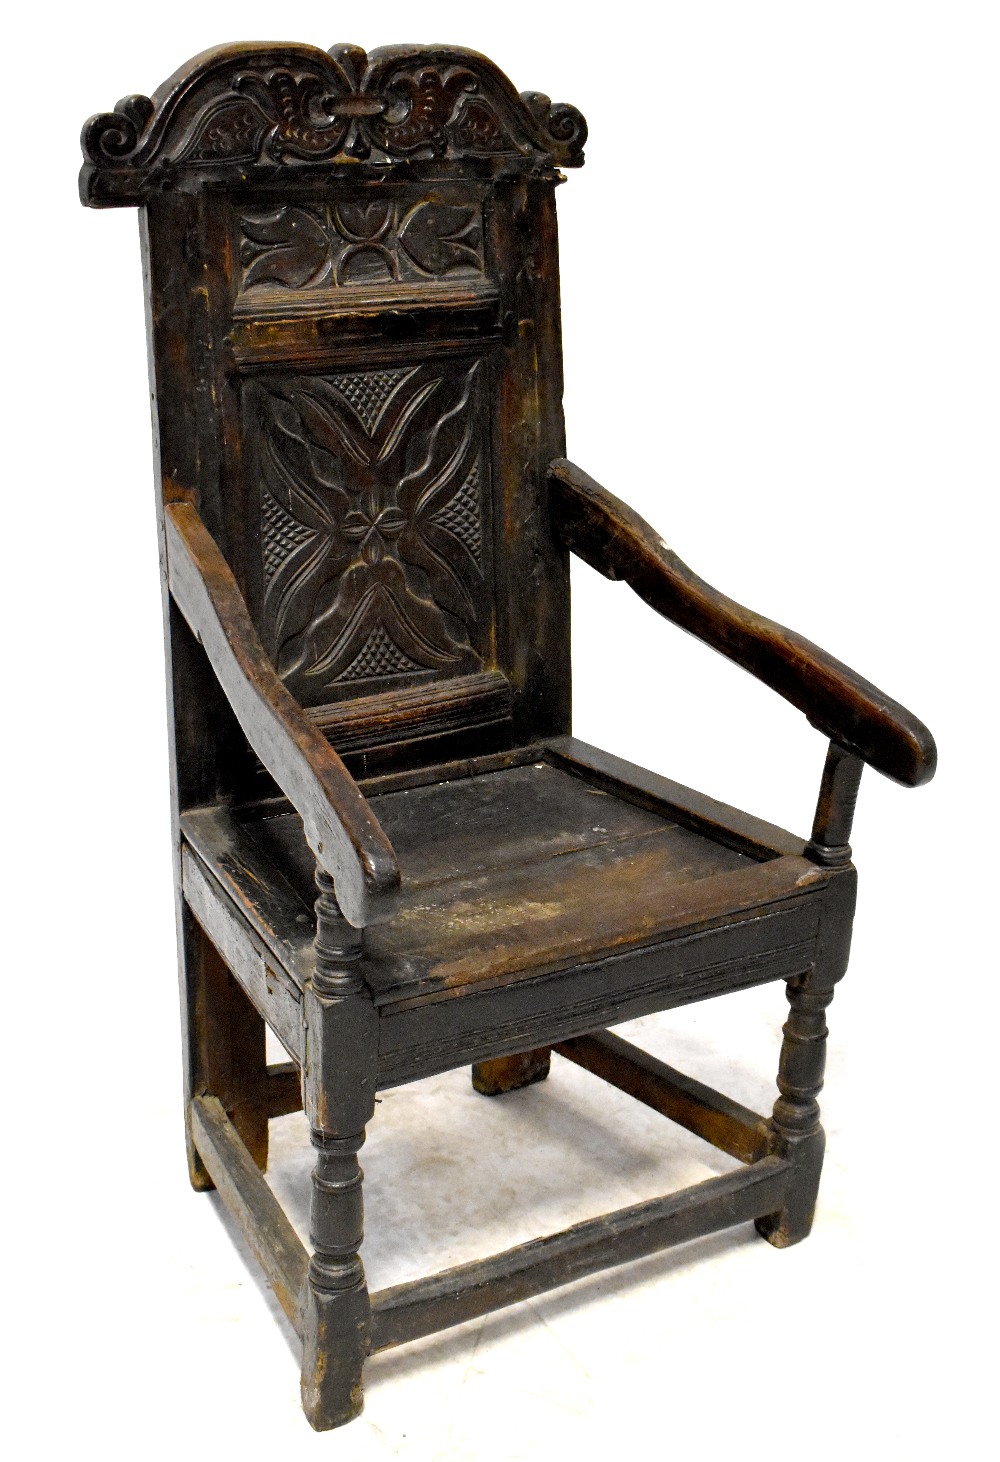 A 17th century carved oak Wainscot armchair,